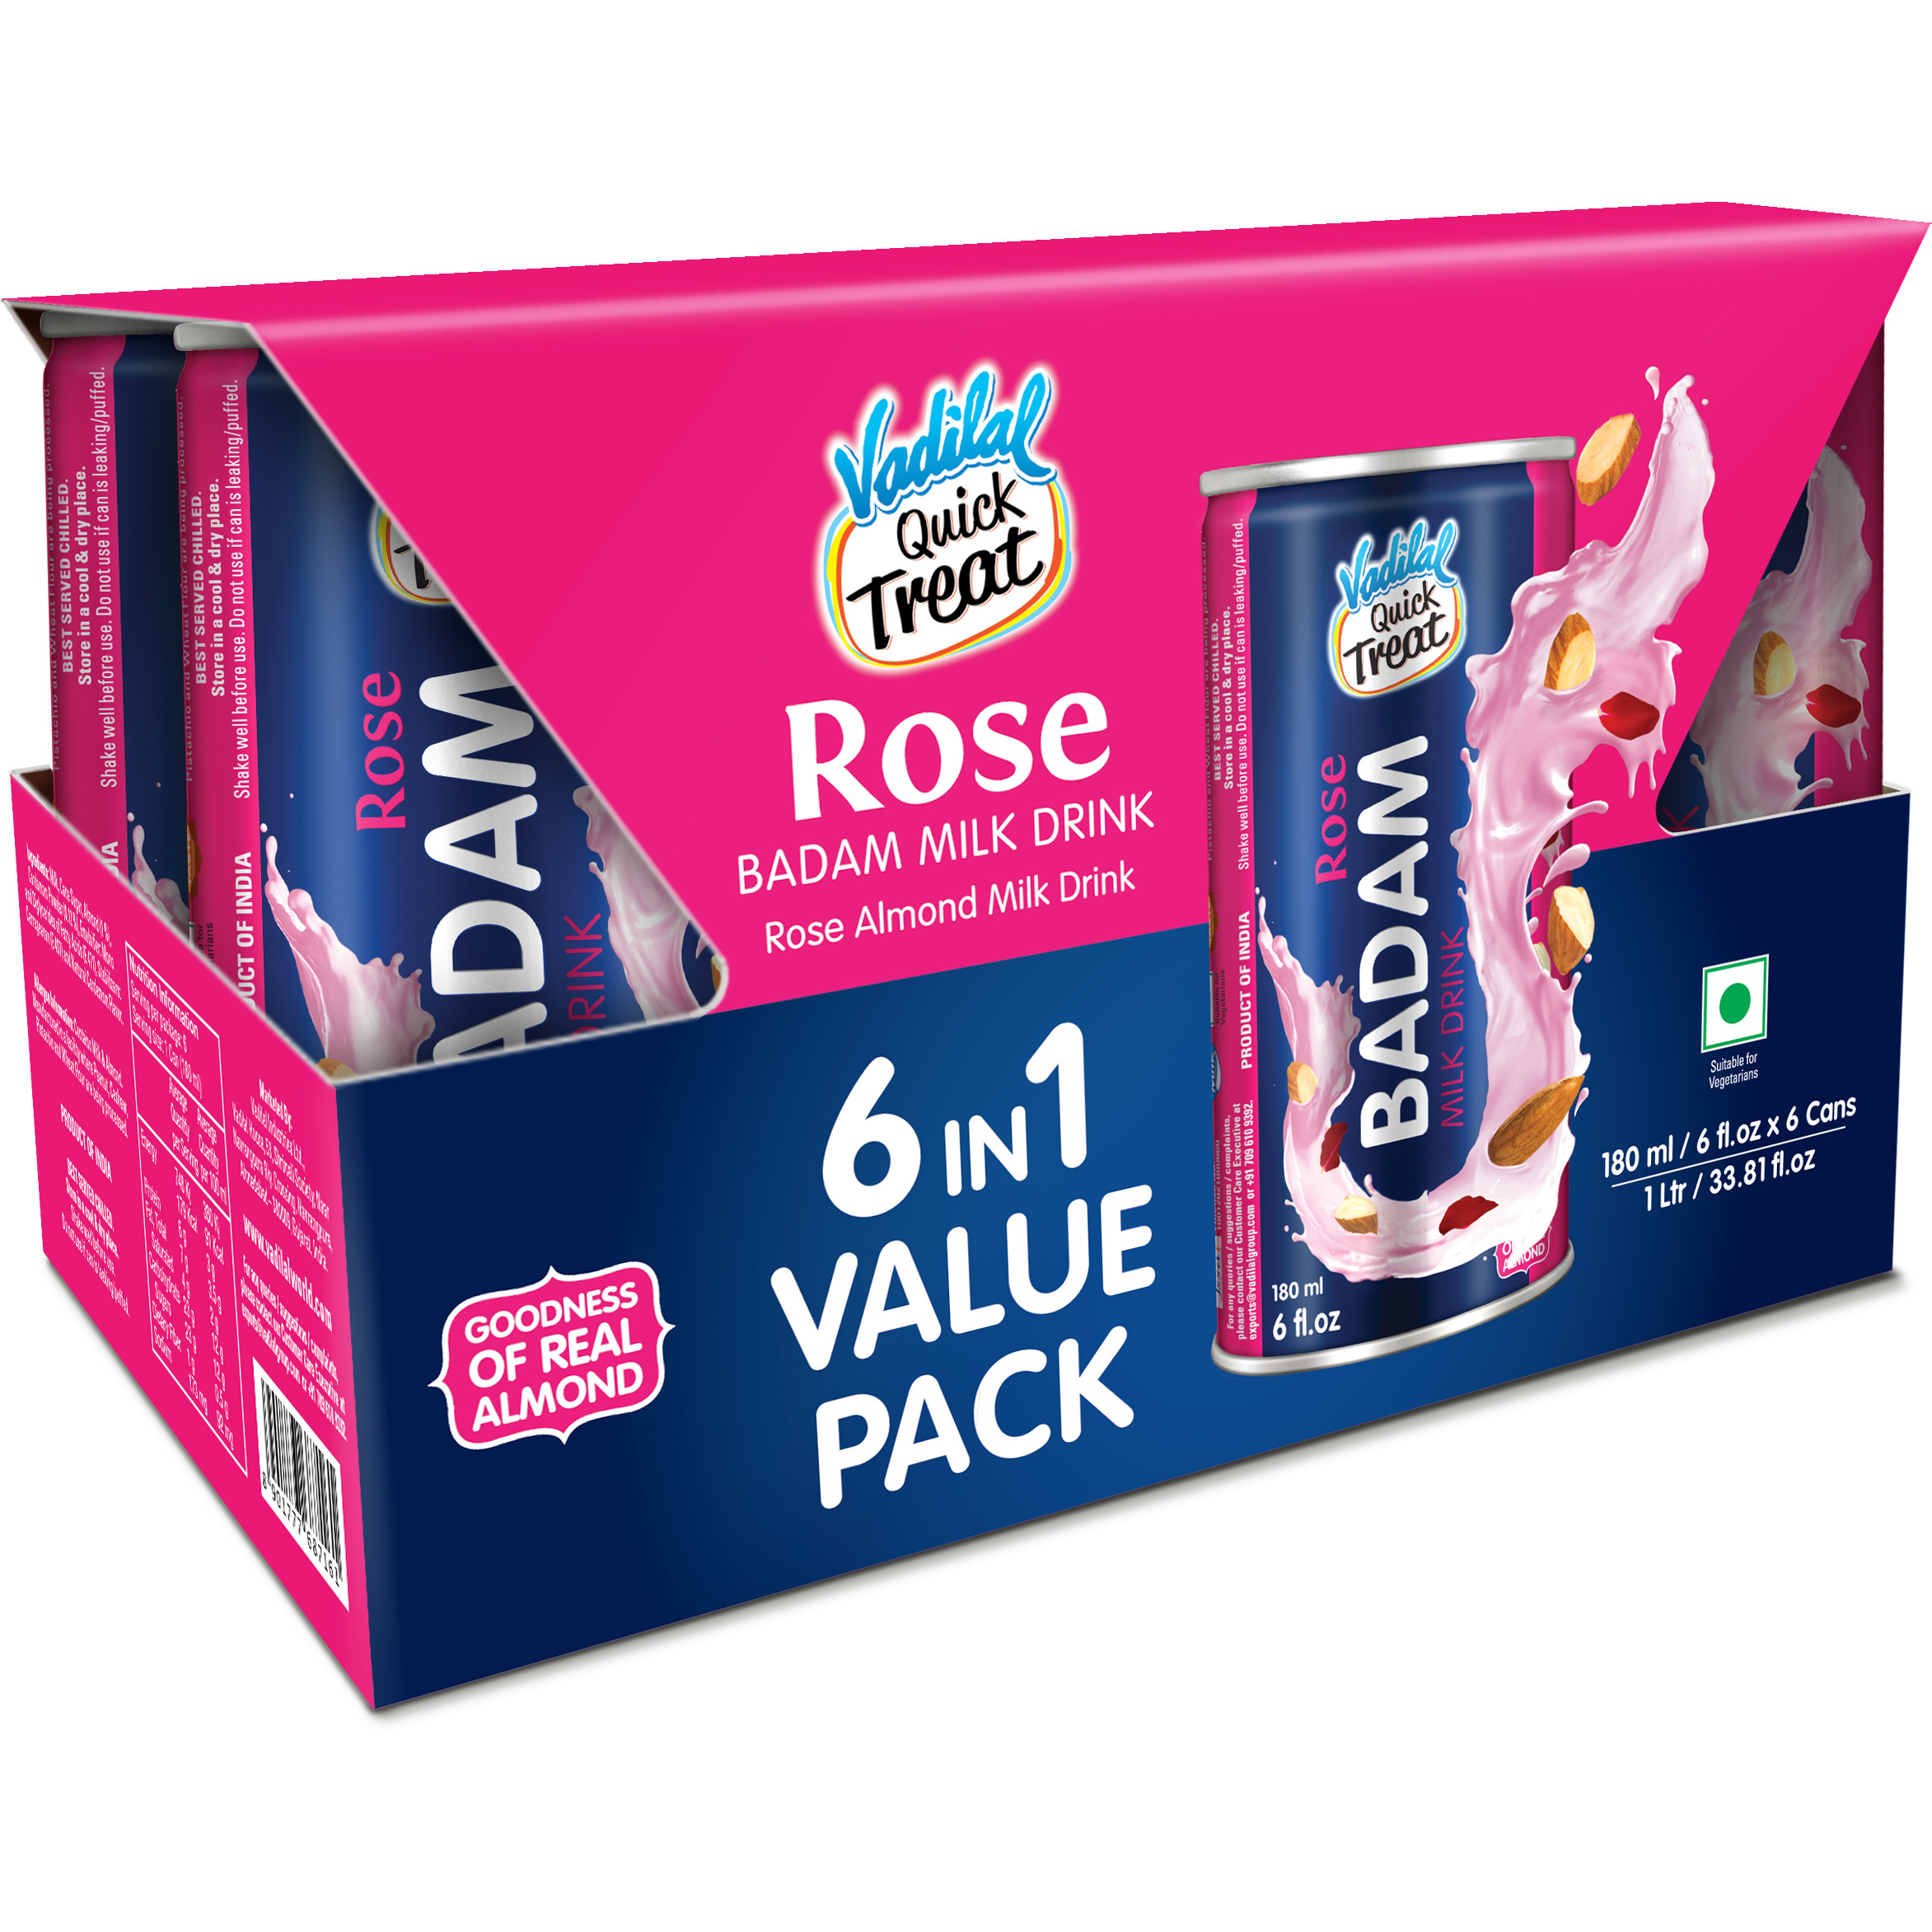 Vadilal Rose Badam Milk Drink 6 in 1 Value Pack - 180 Ml (6 Fl Oz)